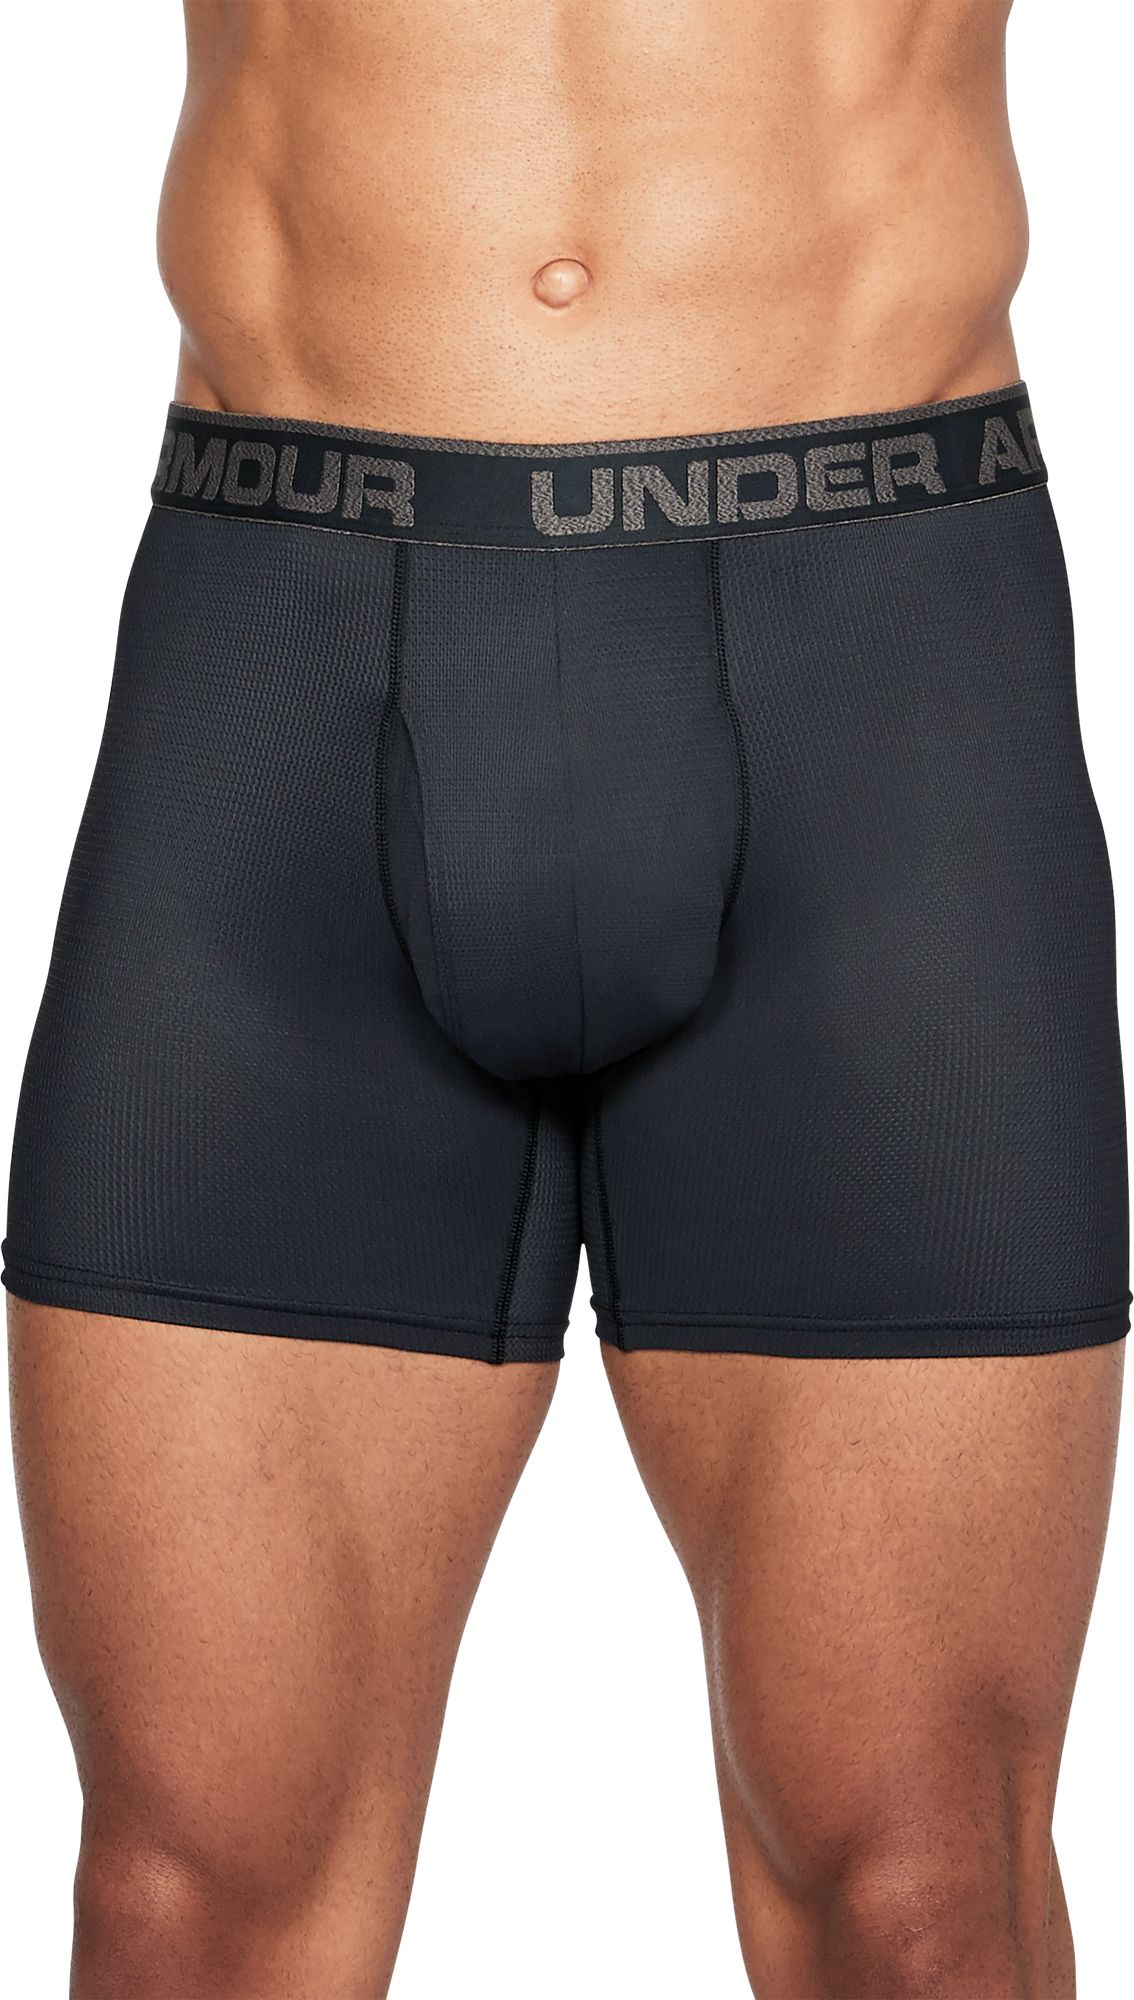 under armor underpants